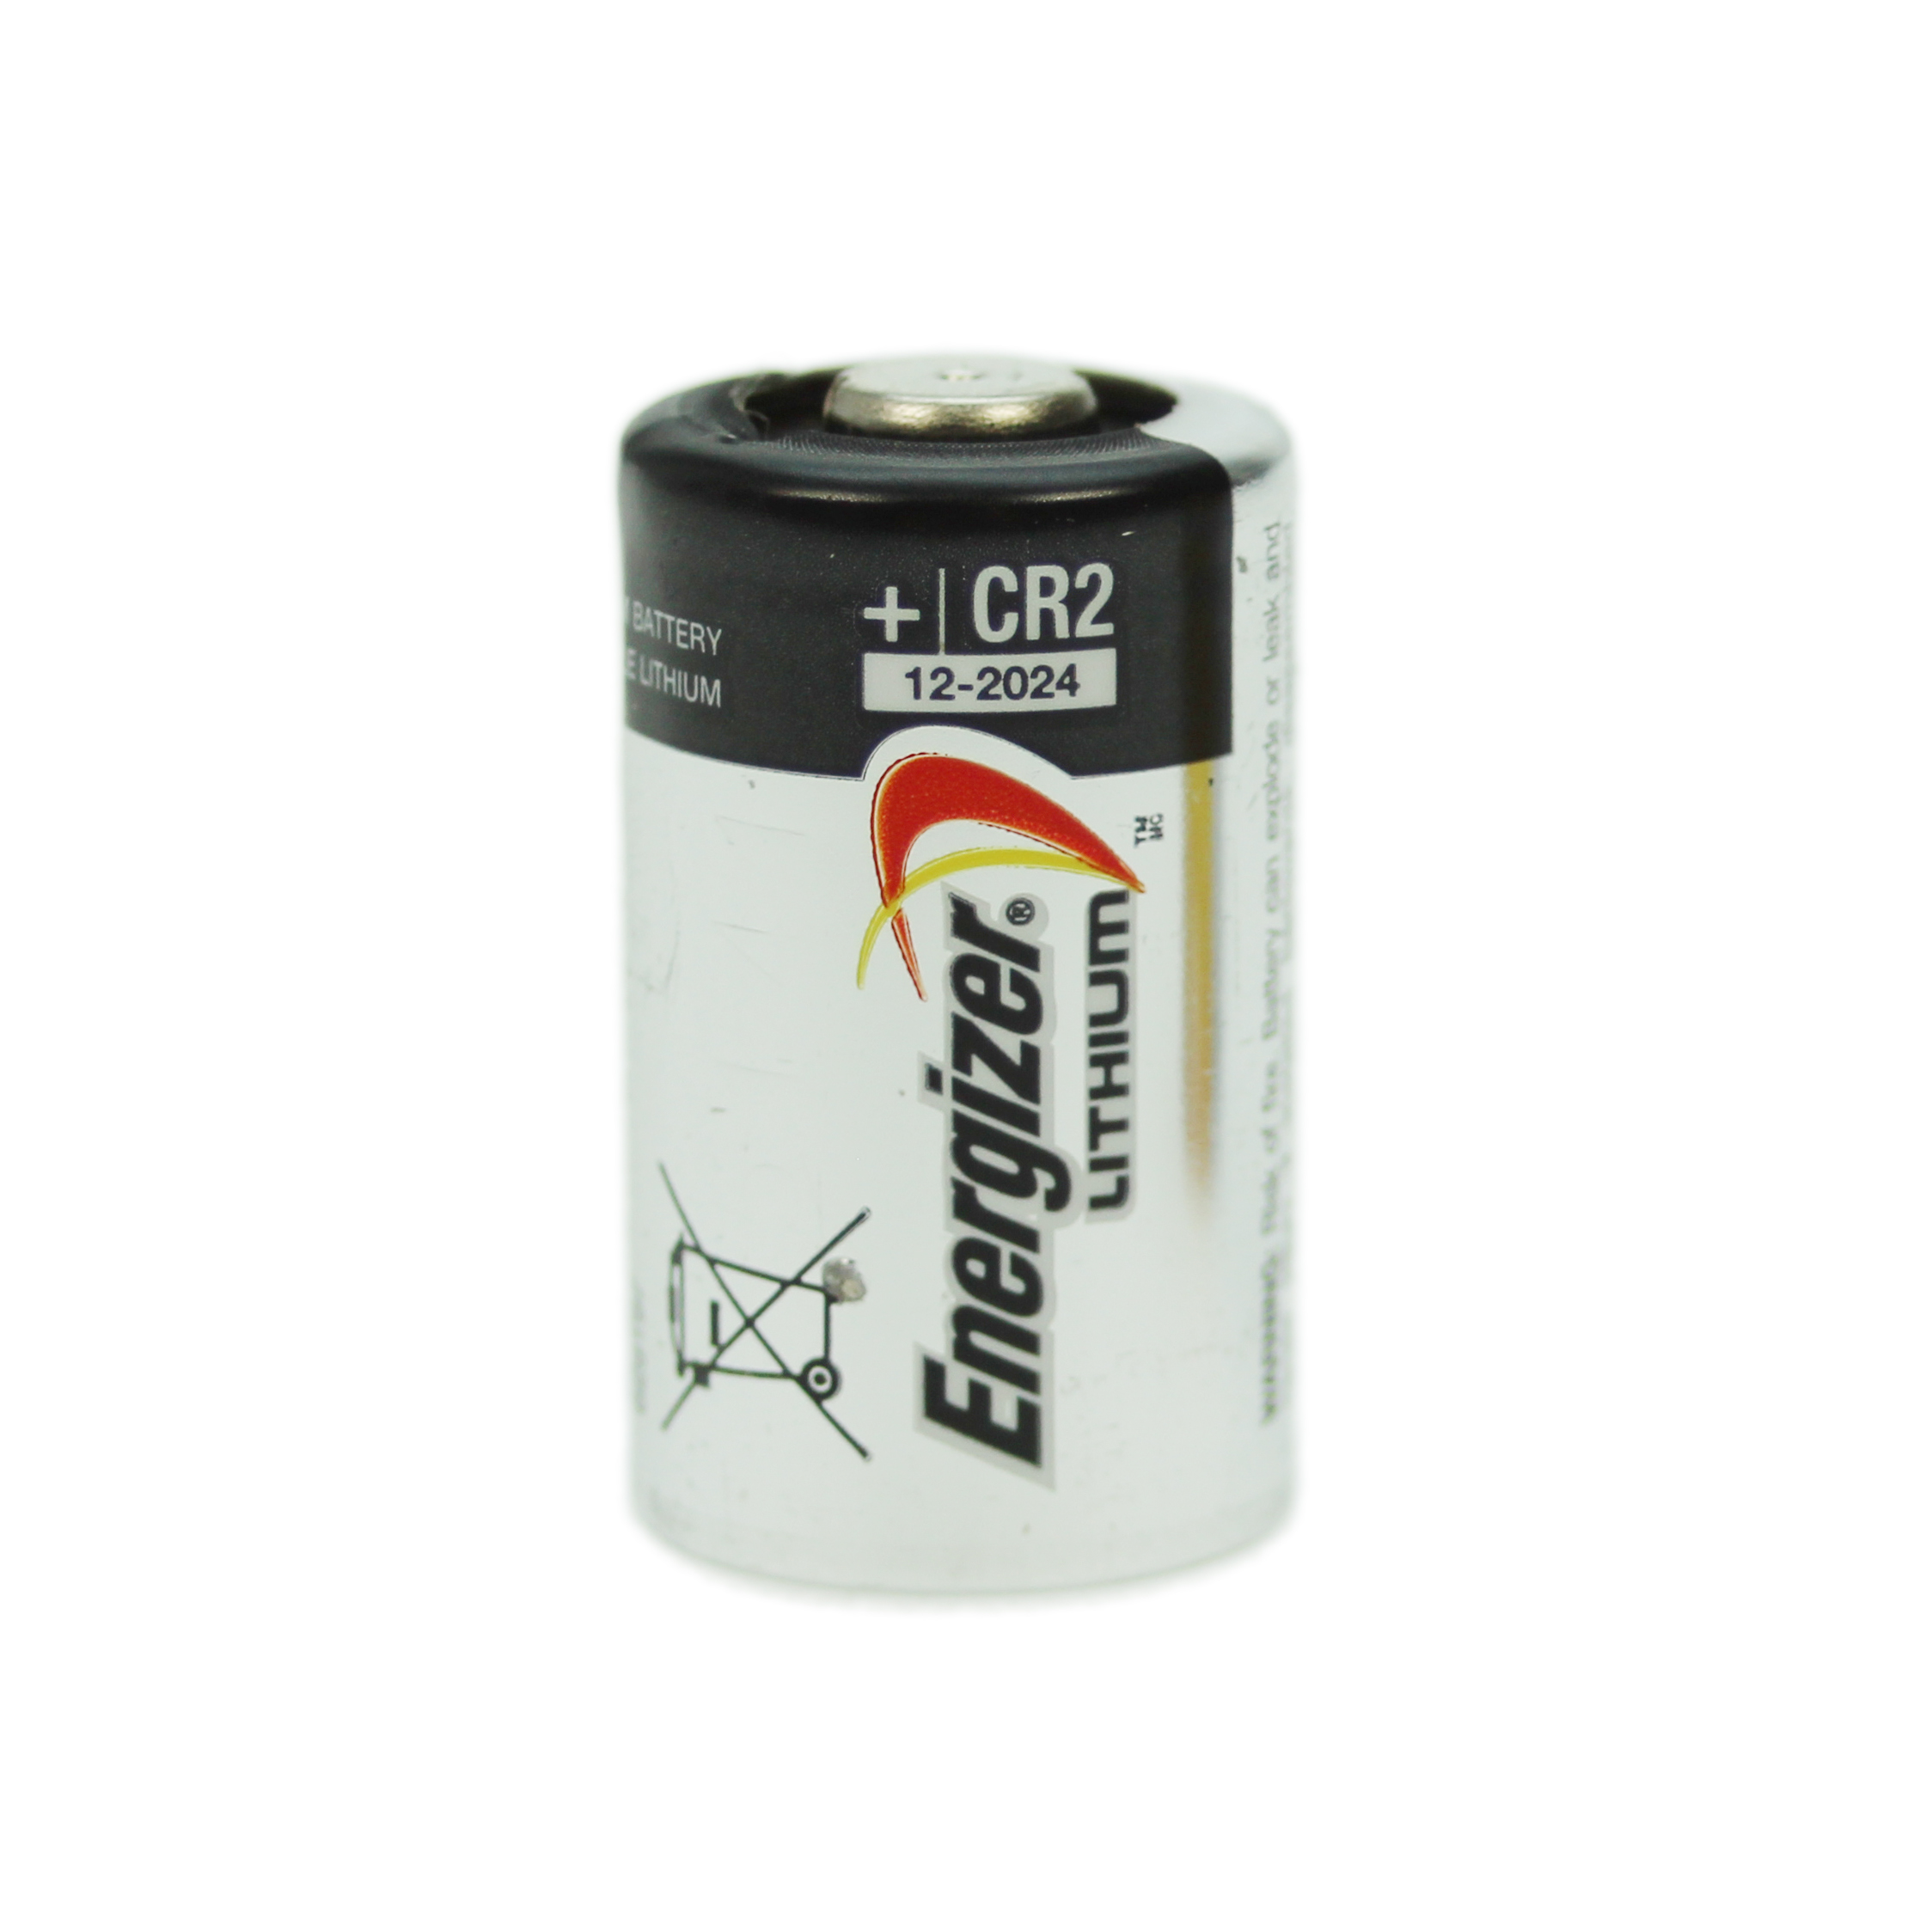 Energizer CR2